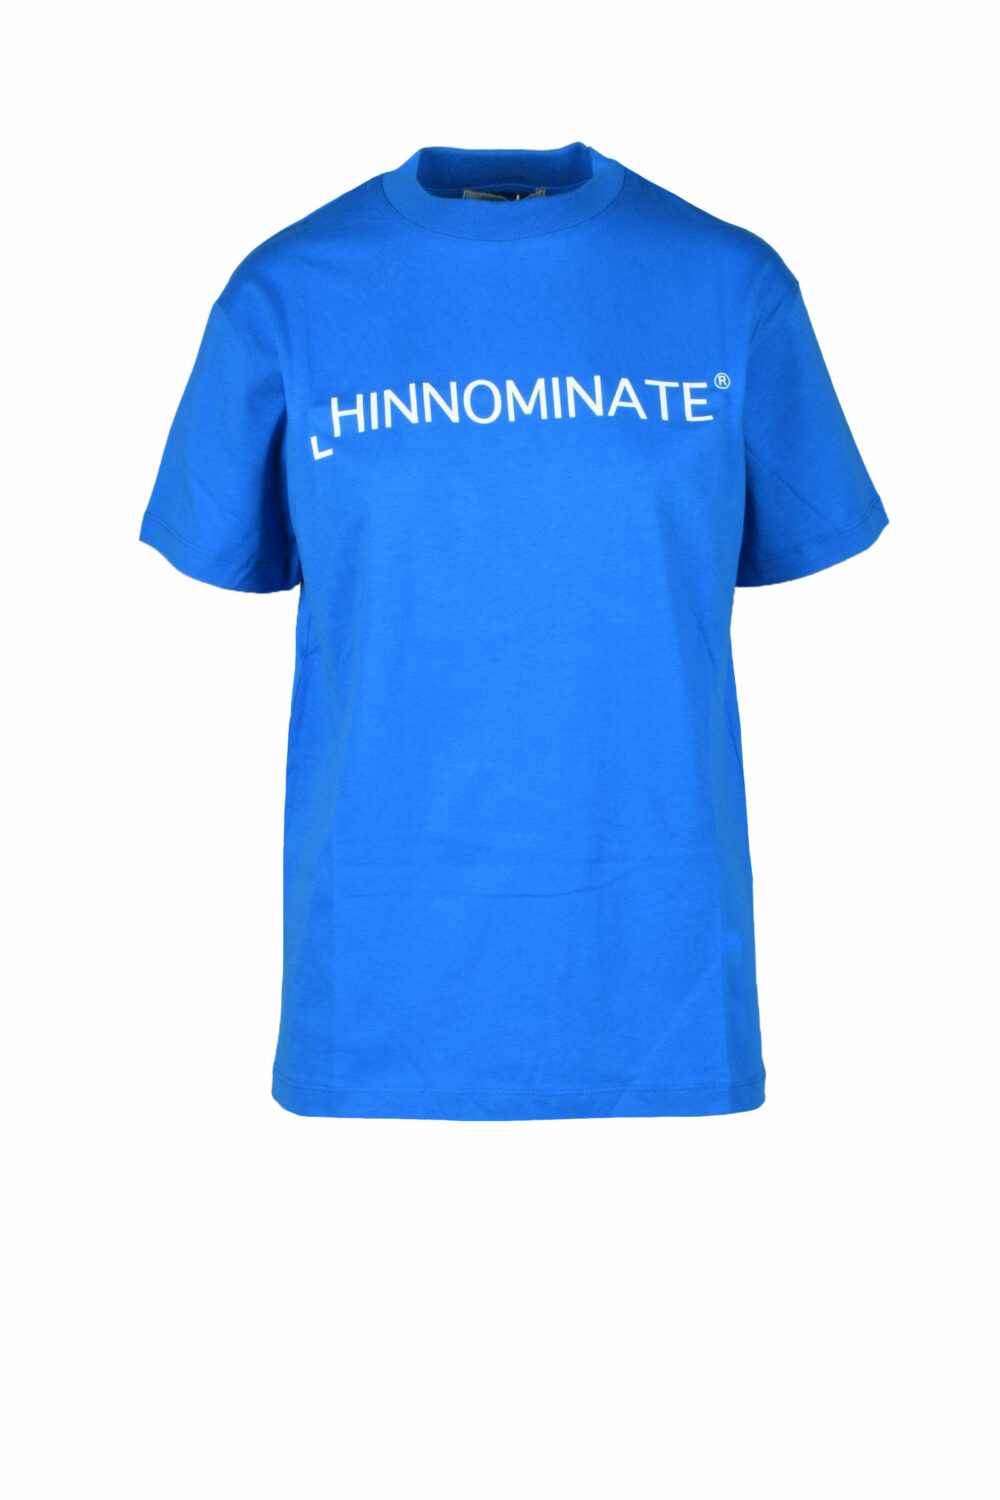 T-shirt Hinnominate Azzurro - Foto 1